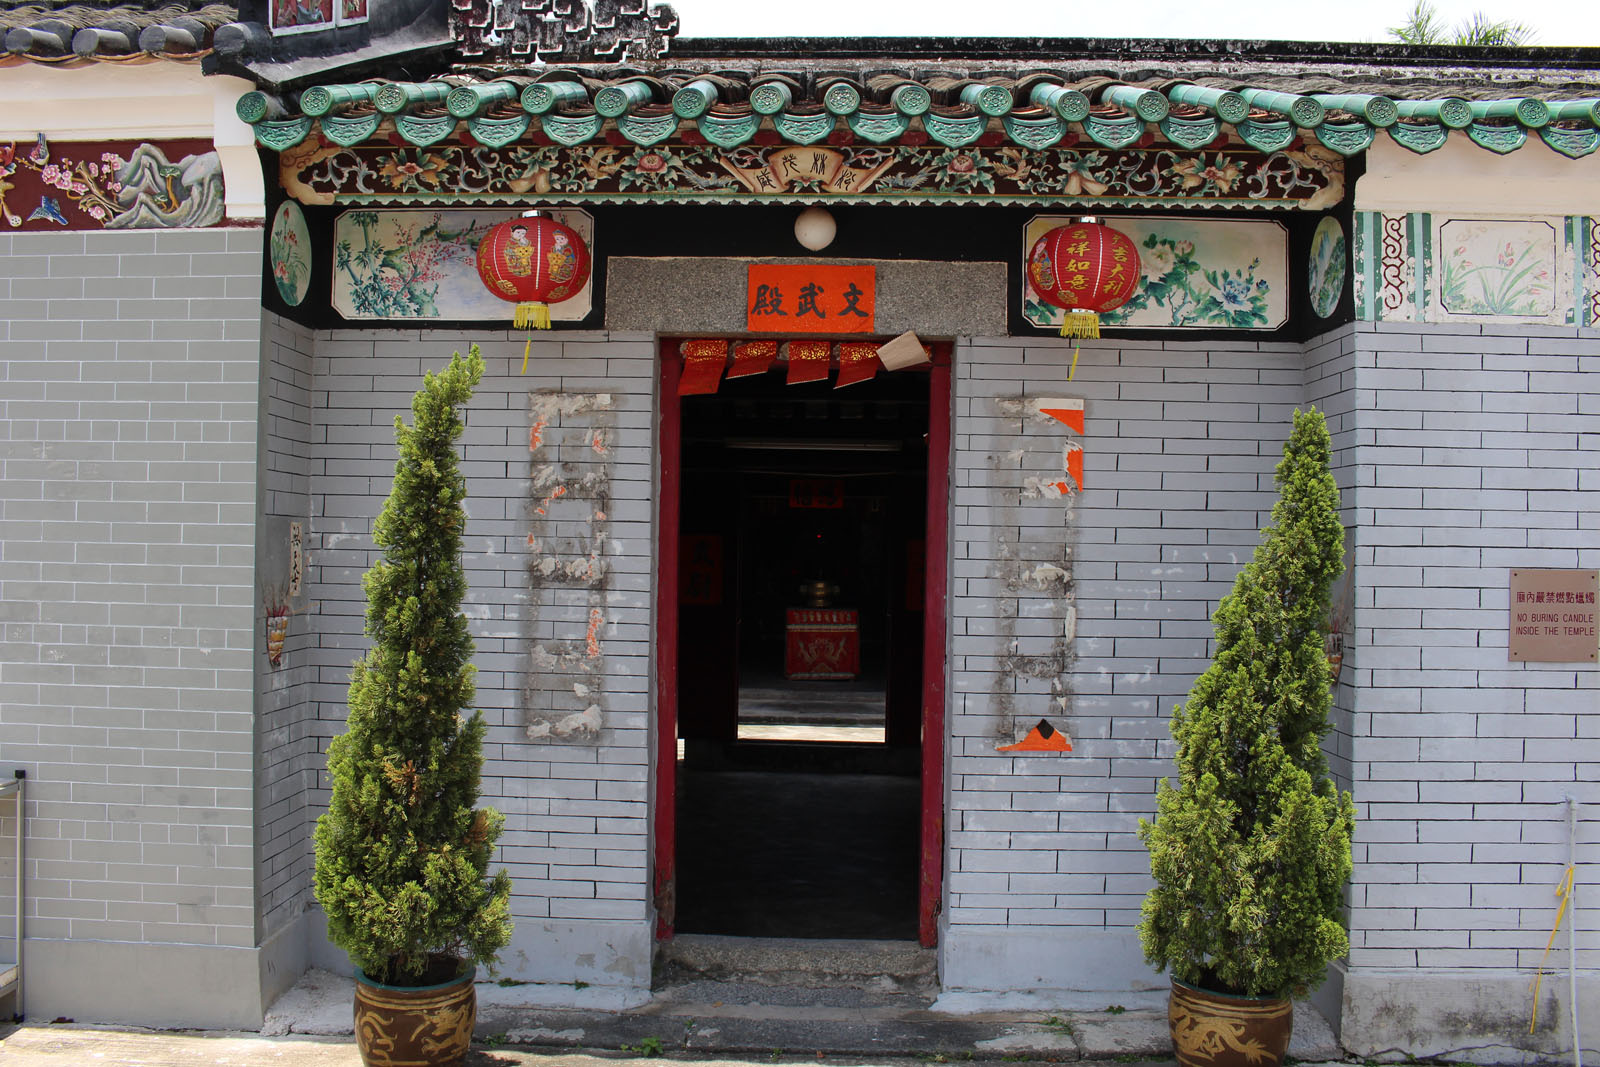 Photo 5: Lam Tsuen Tin Hau Temple